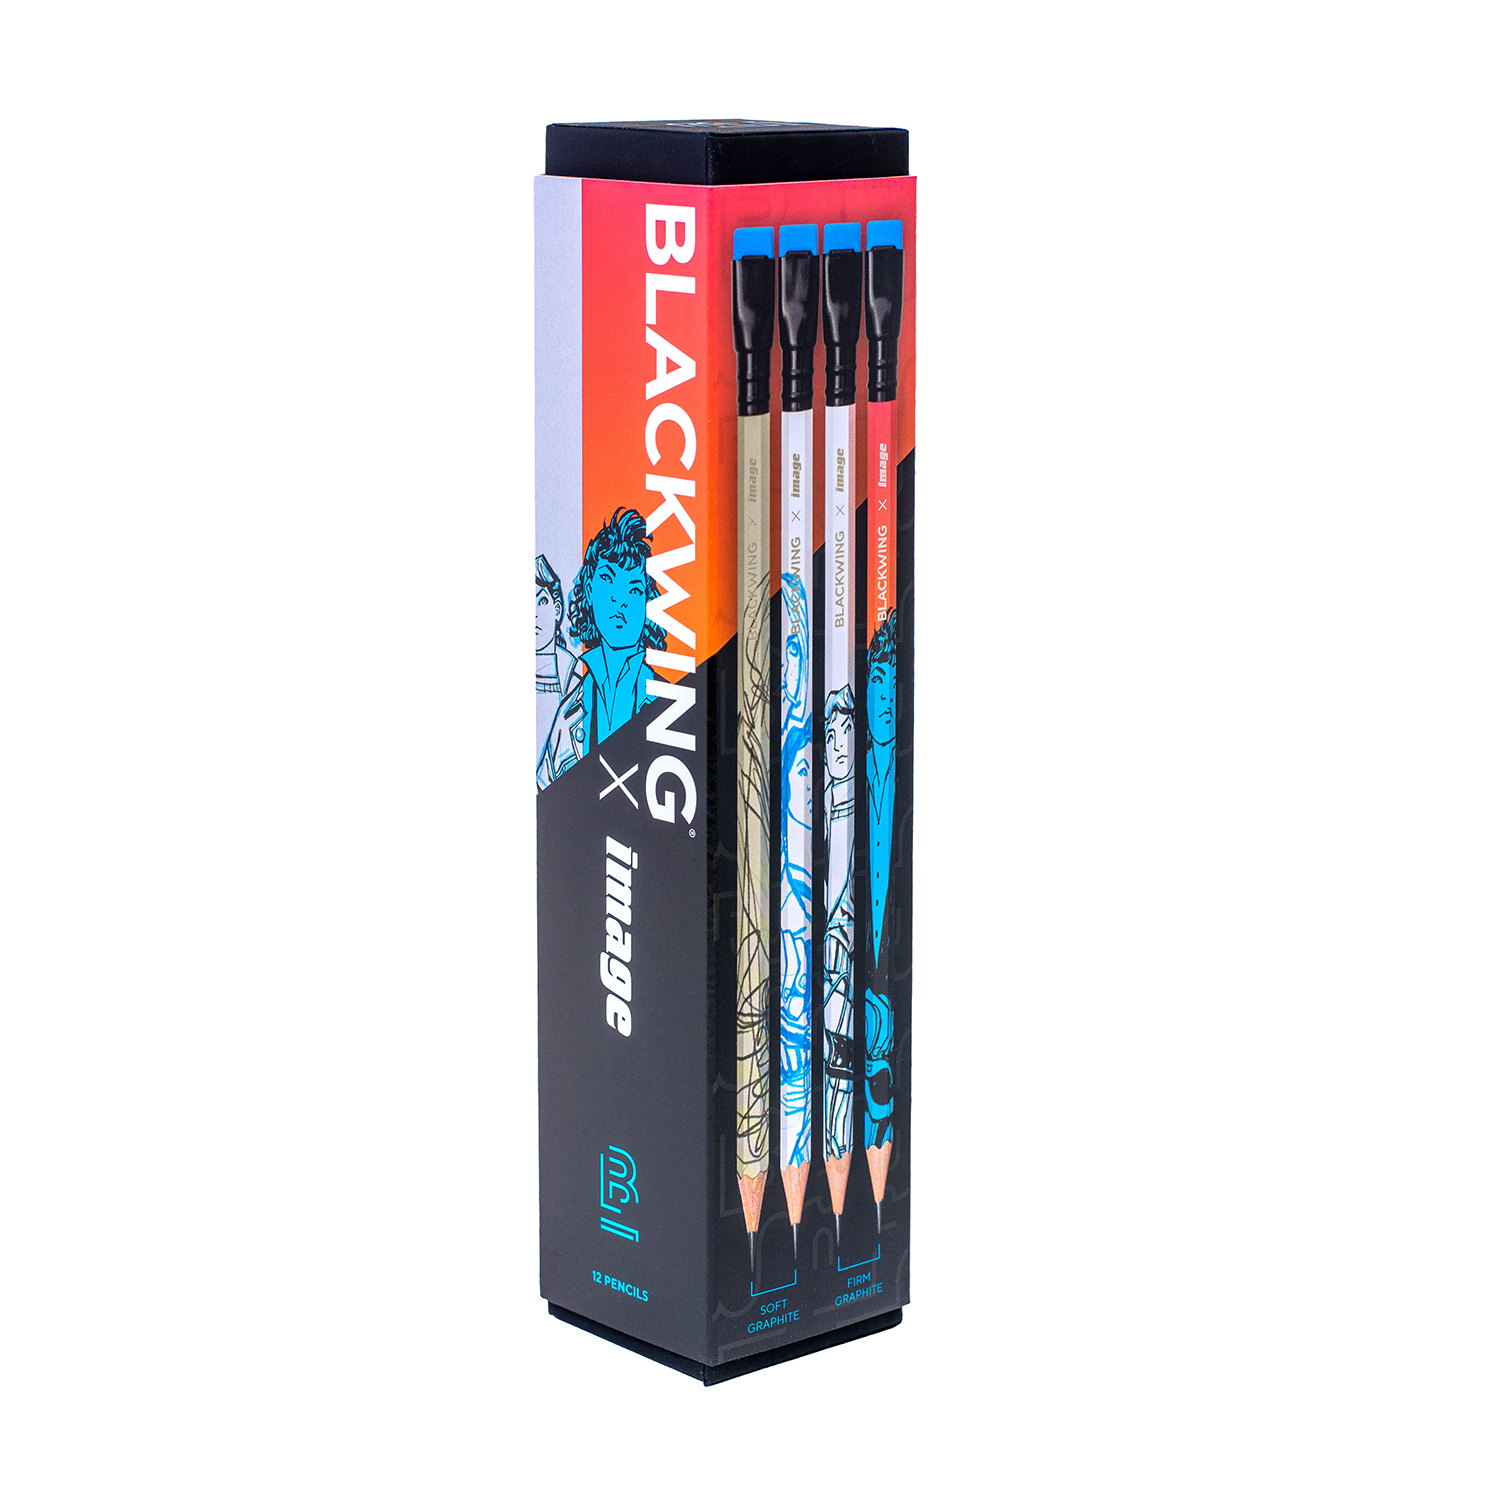 Blackwing x Image Comics Pencils - 12 Pack Box